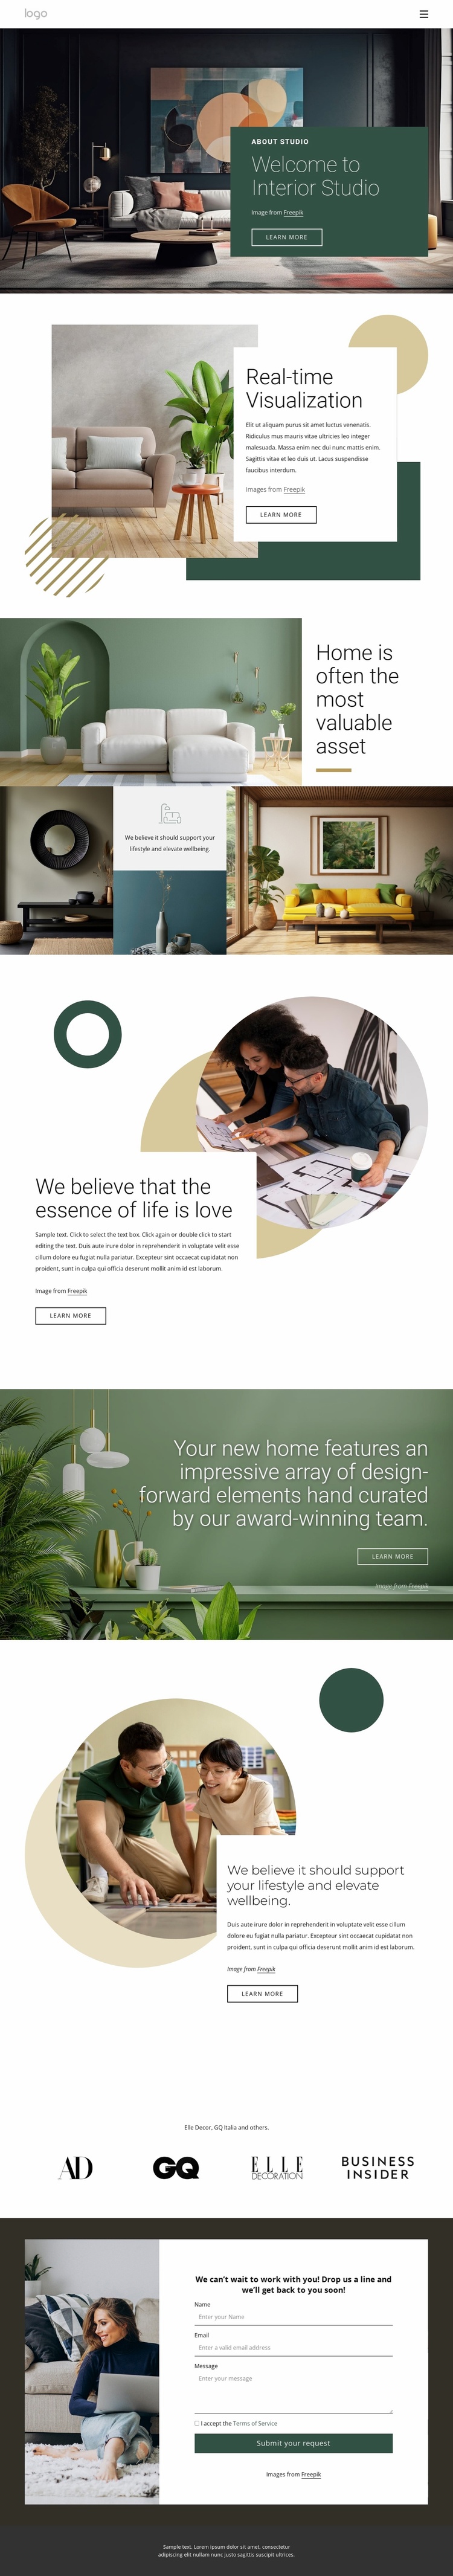 Award-winning interior design studio Website Template